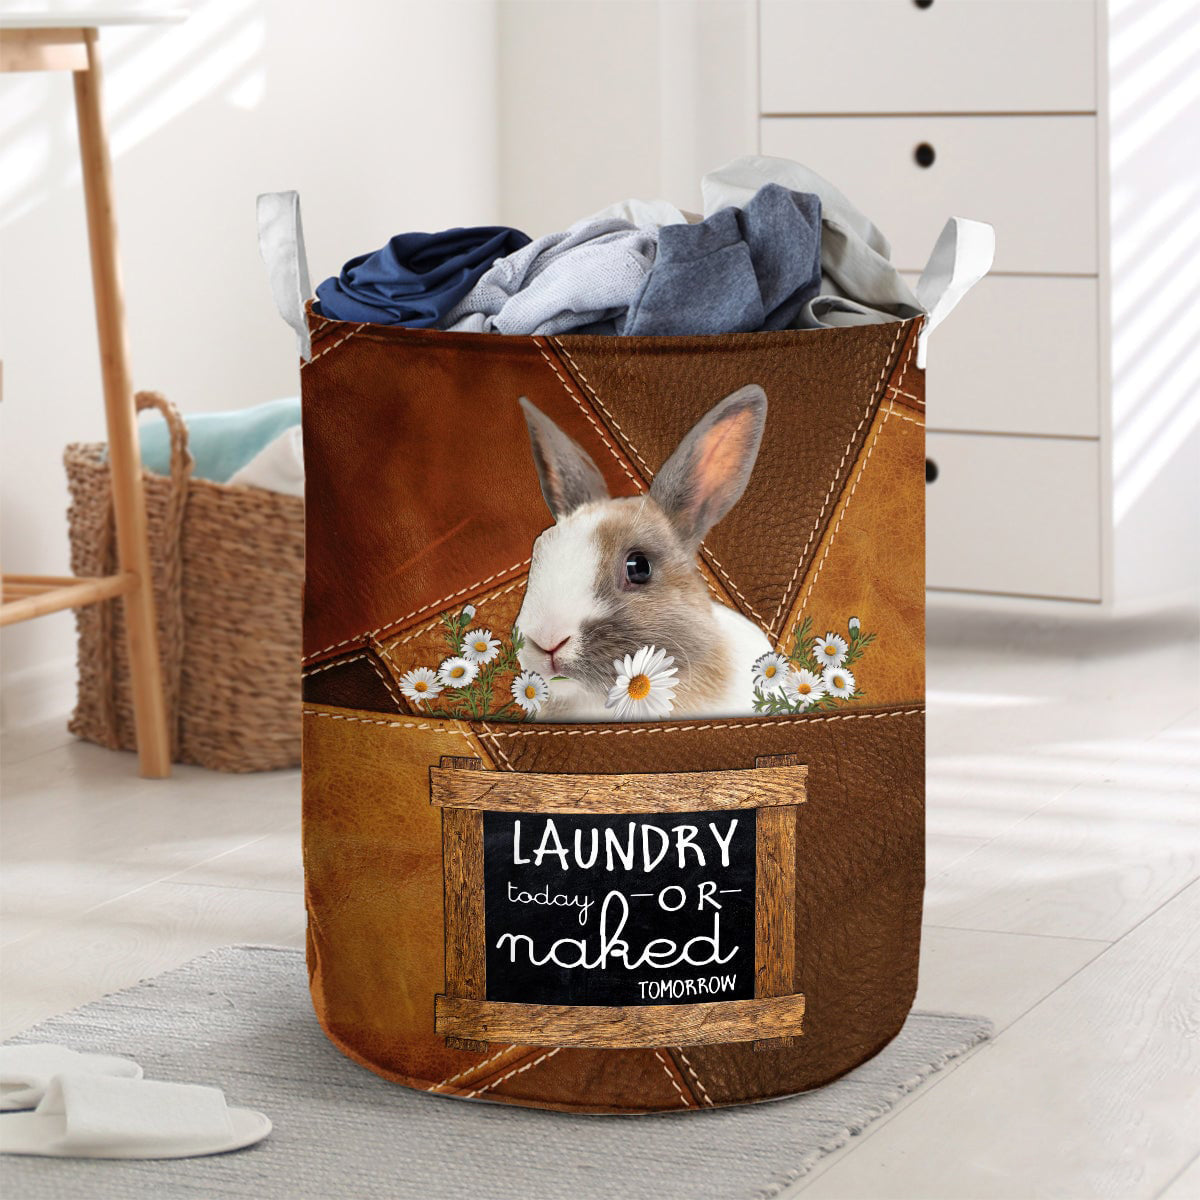 Rabbit-laundry today or naked tomorrow laundry basket